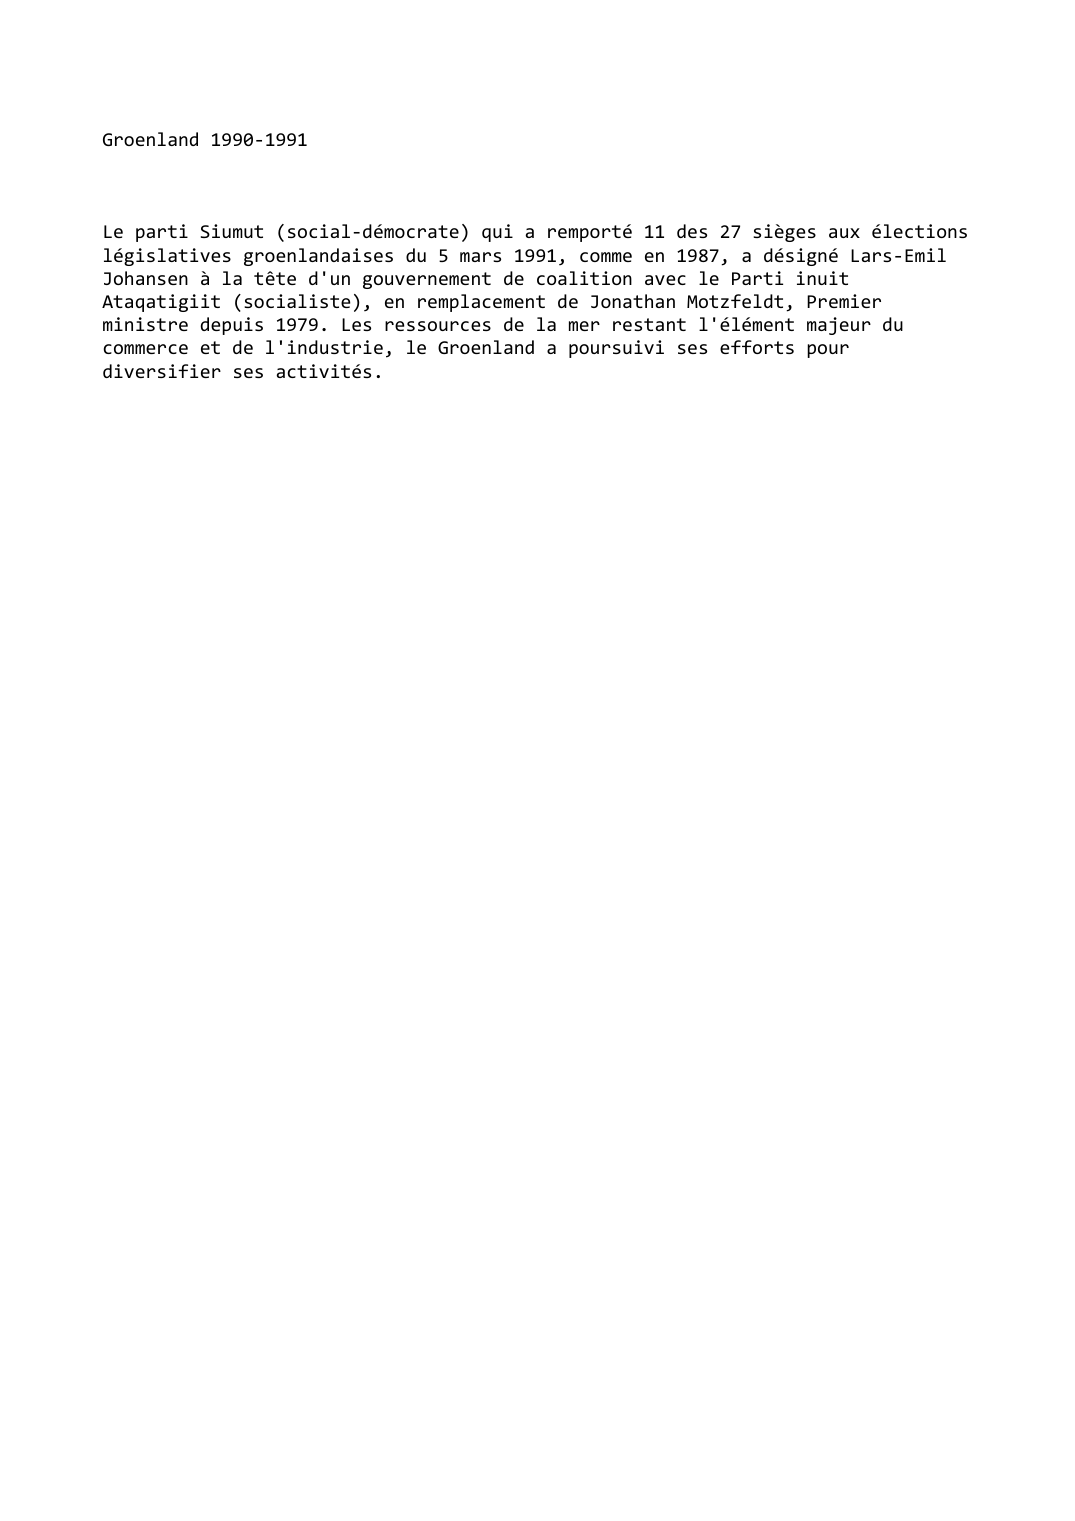 Prévisualisation du document Groenland (1990-1991)